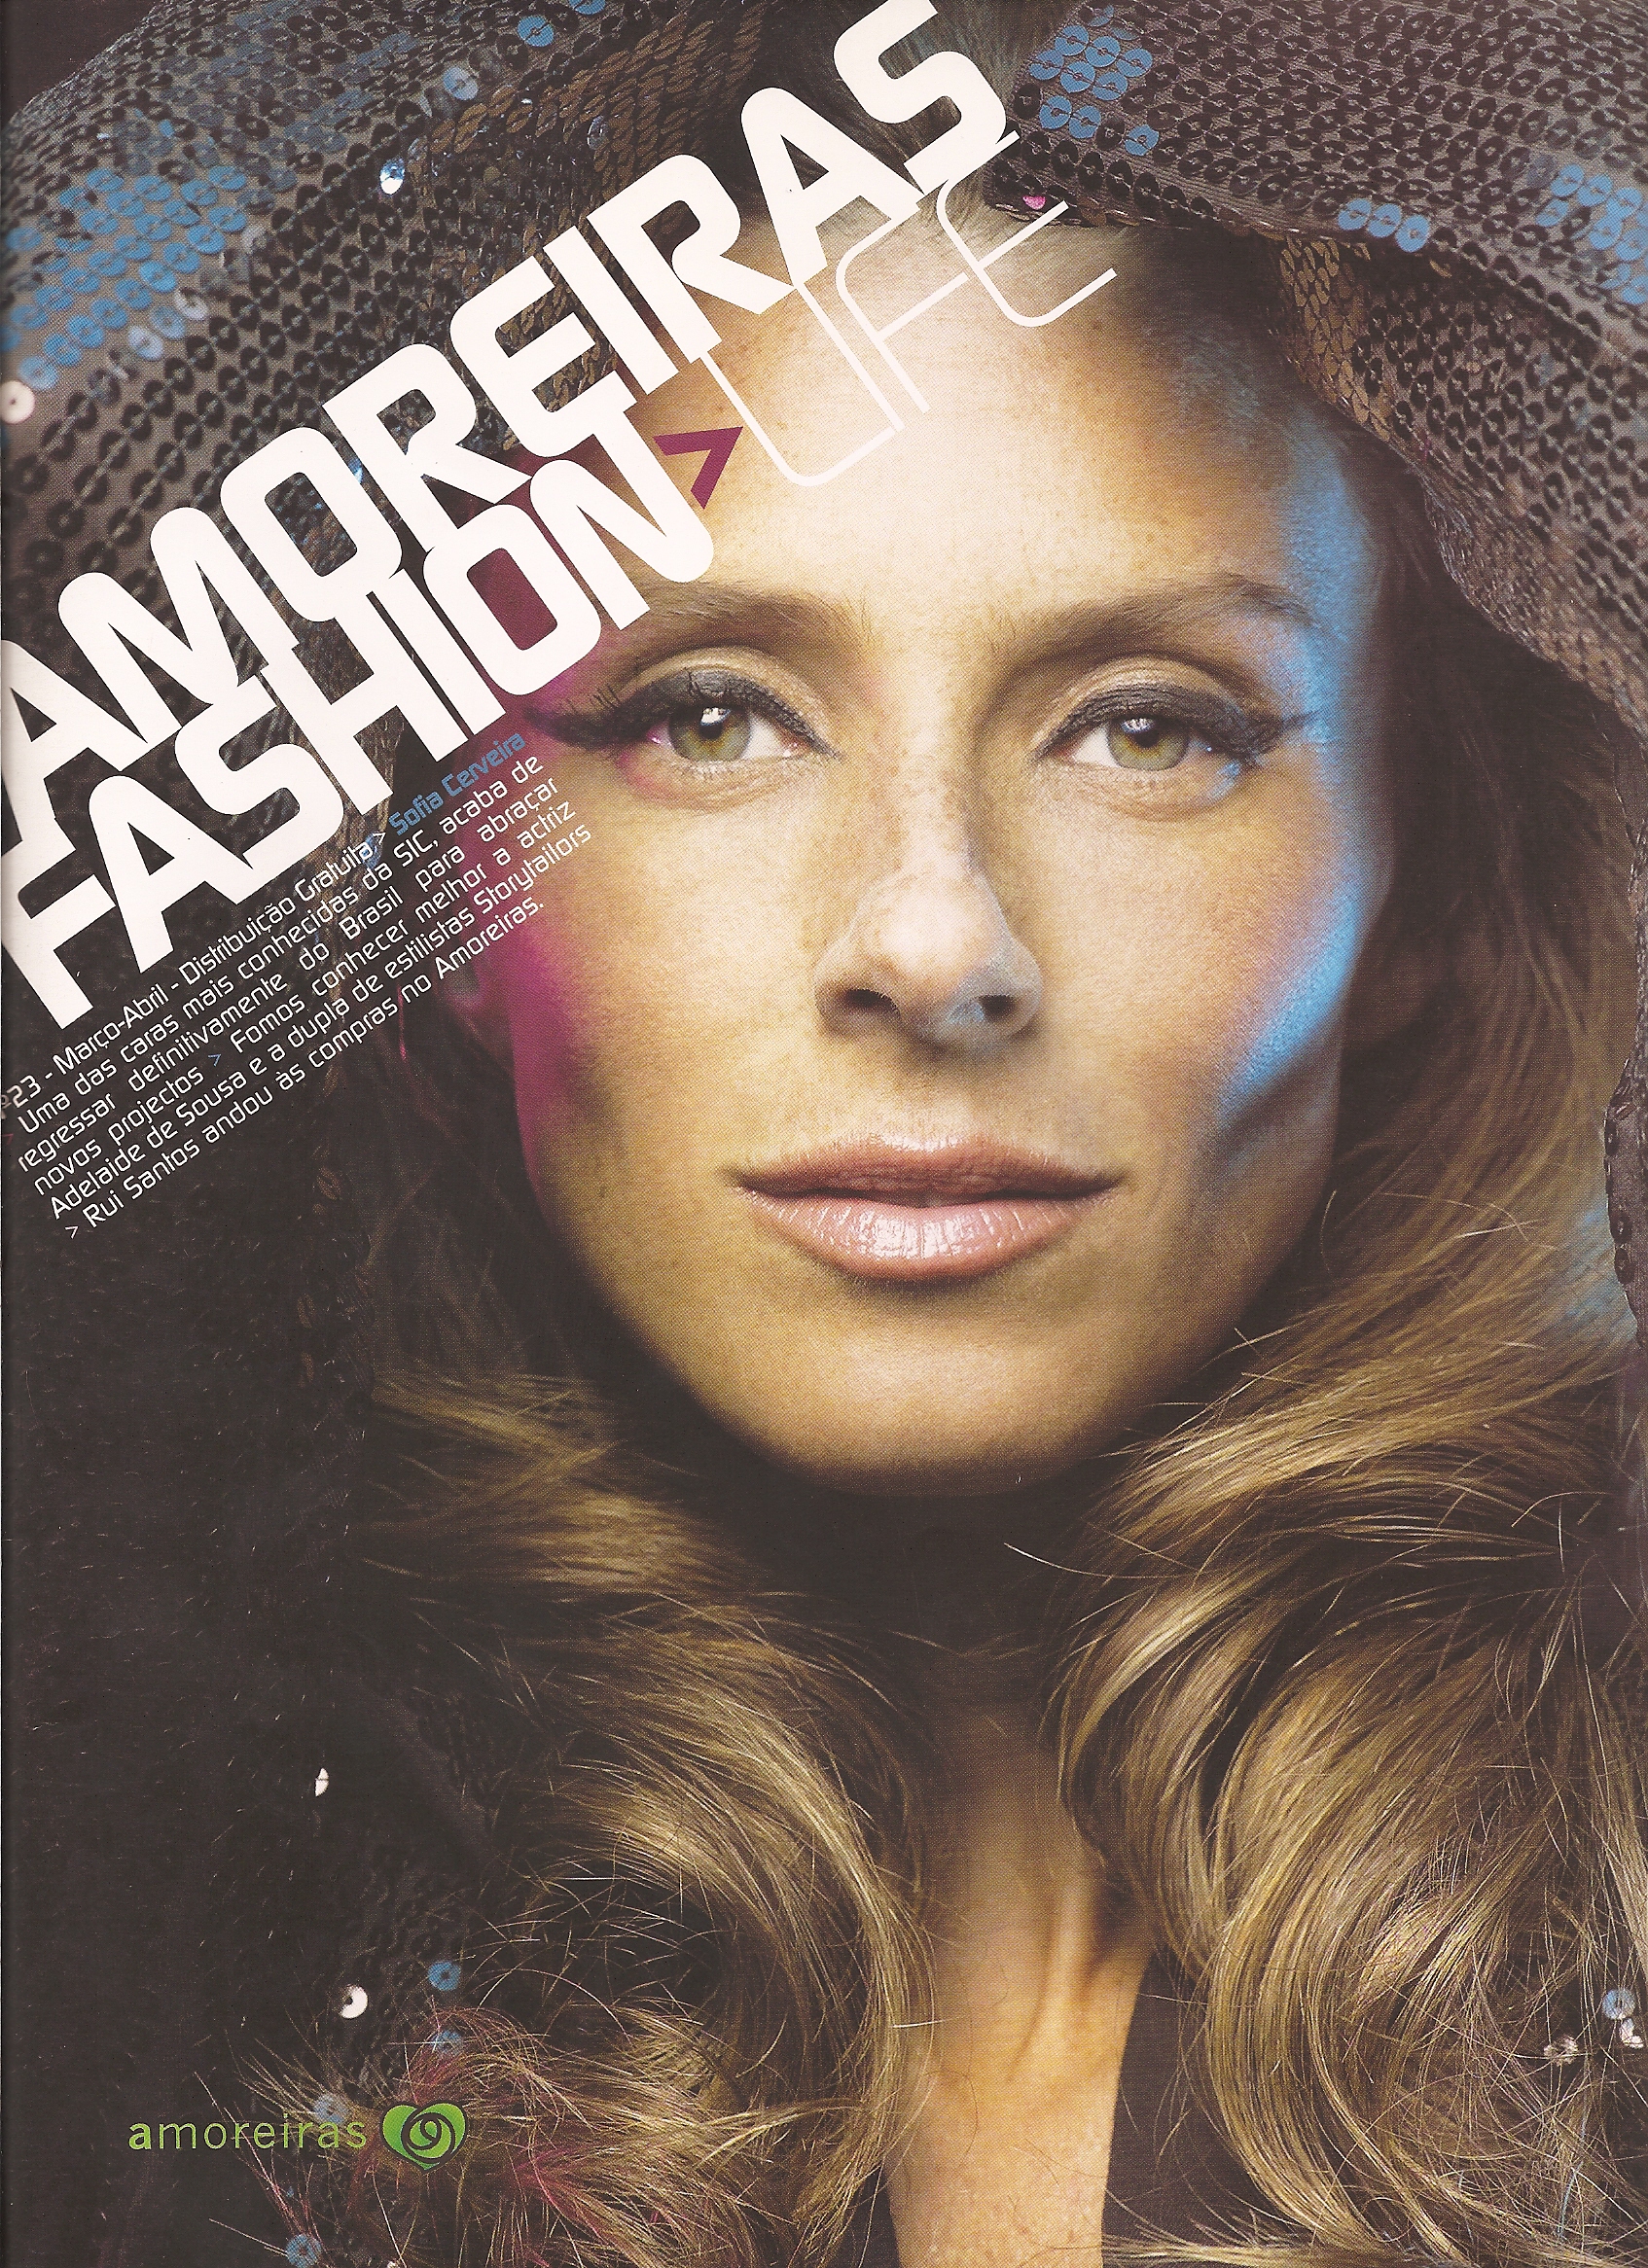 Amoreiras-cover-200703